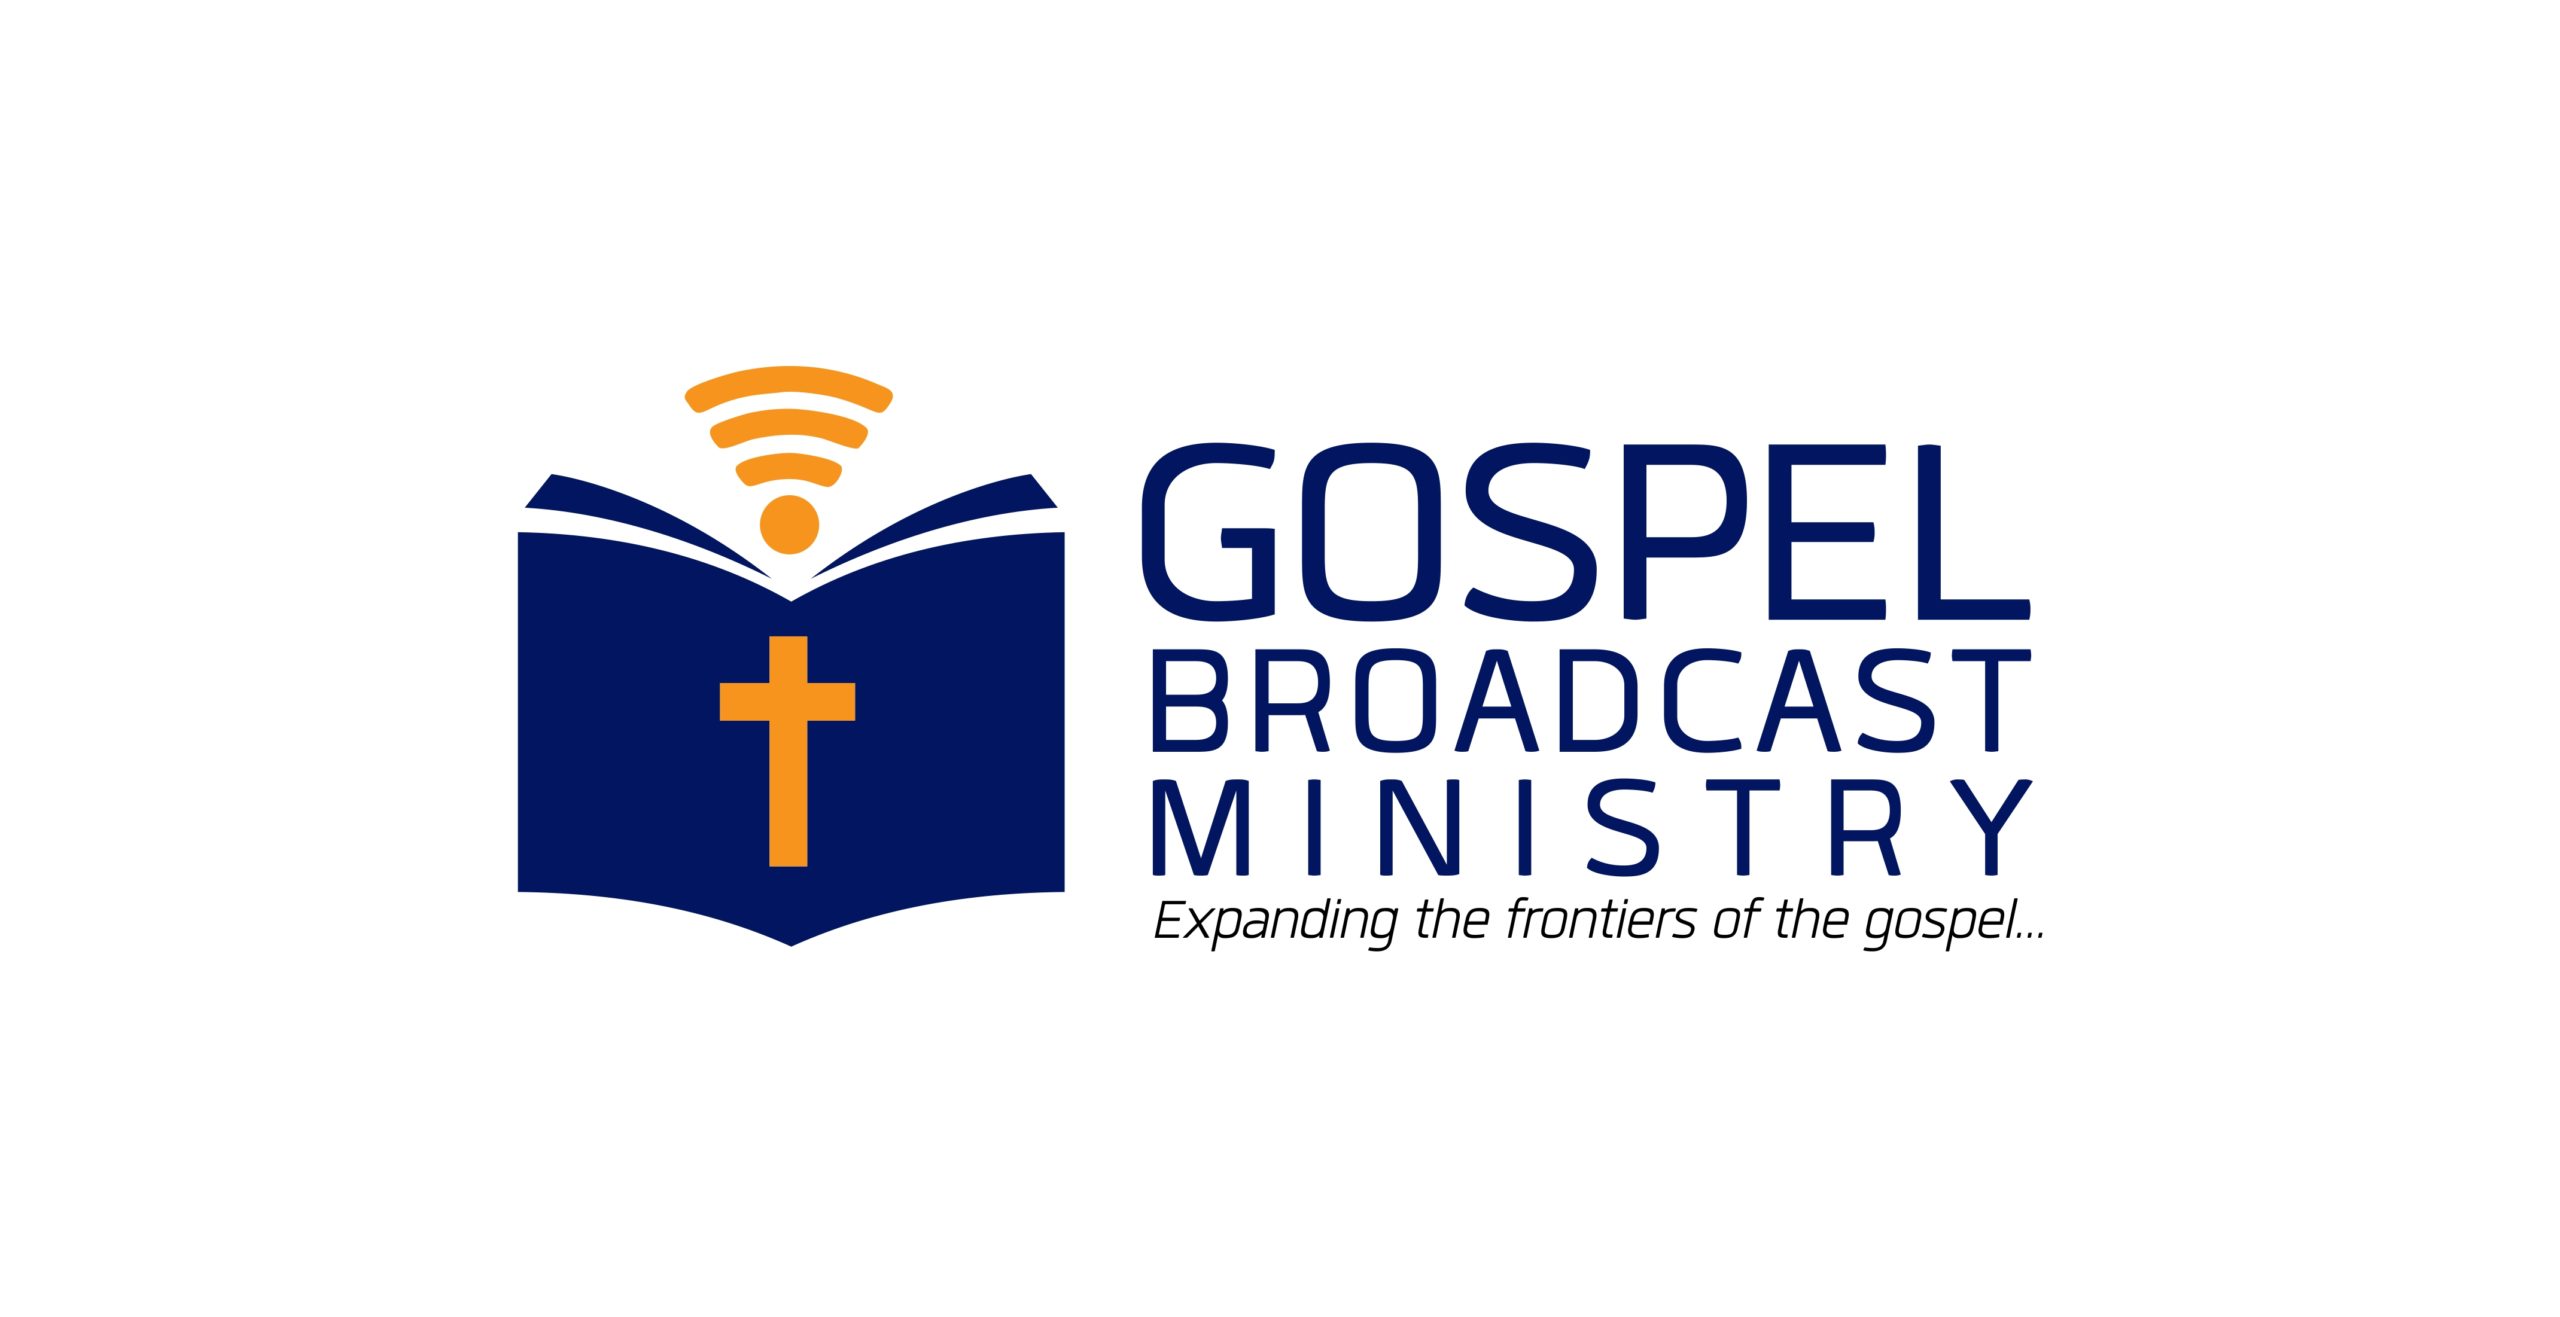 HomePage » Gospel Broadcast